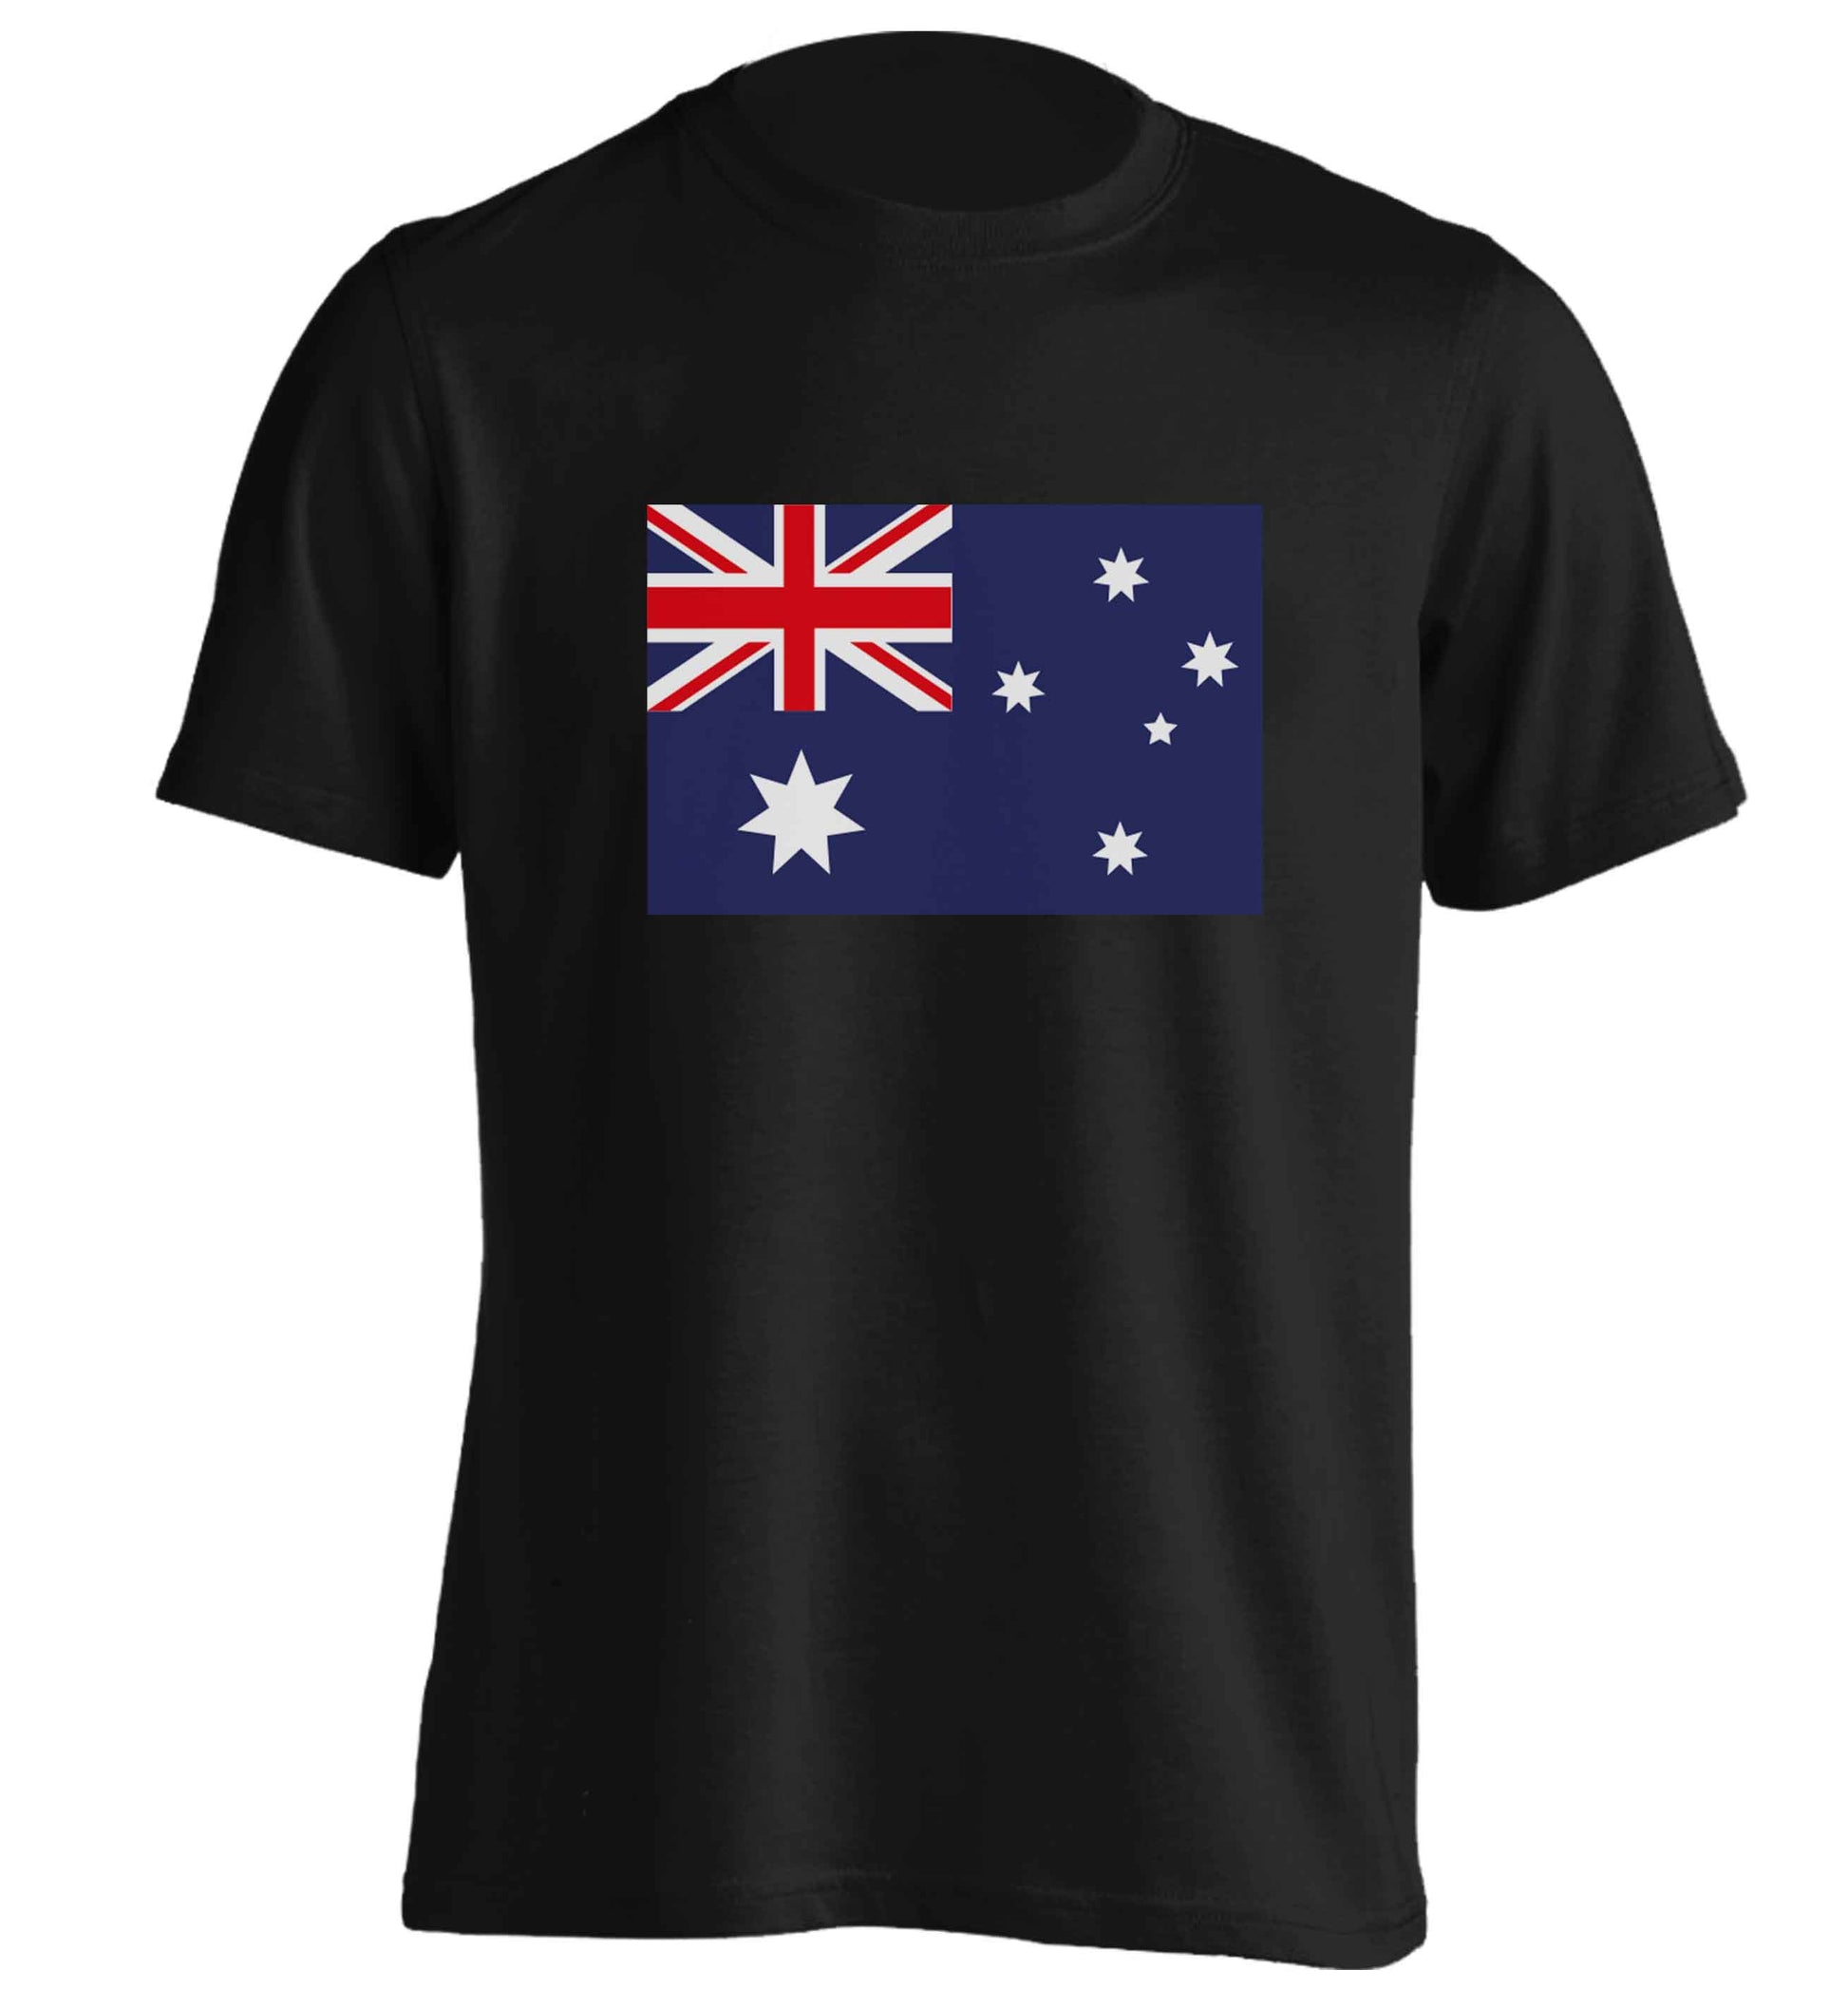 Australian Flag adults unisex black Tshirt 2XL